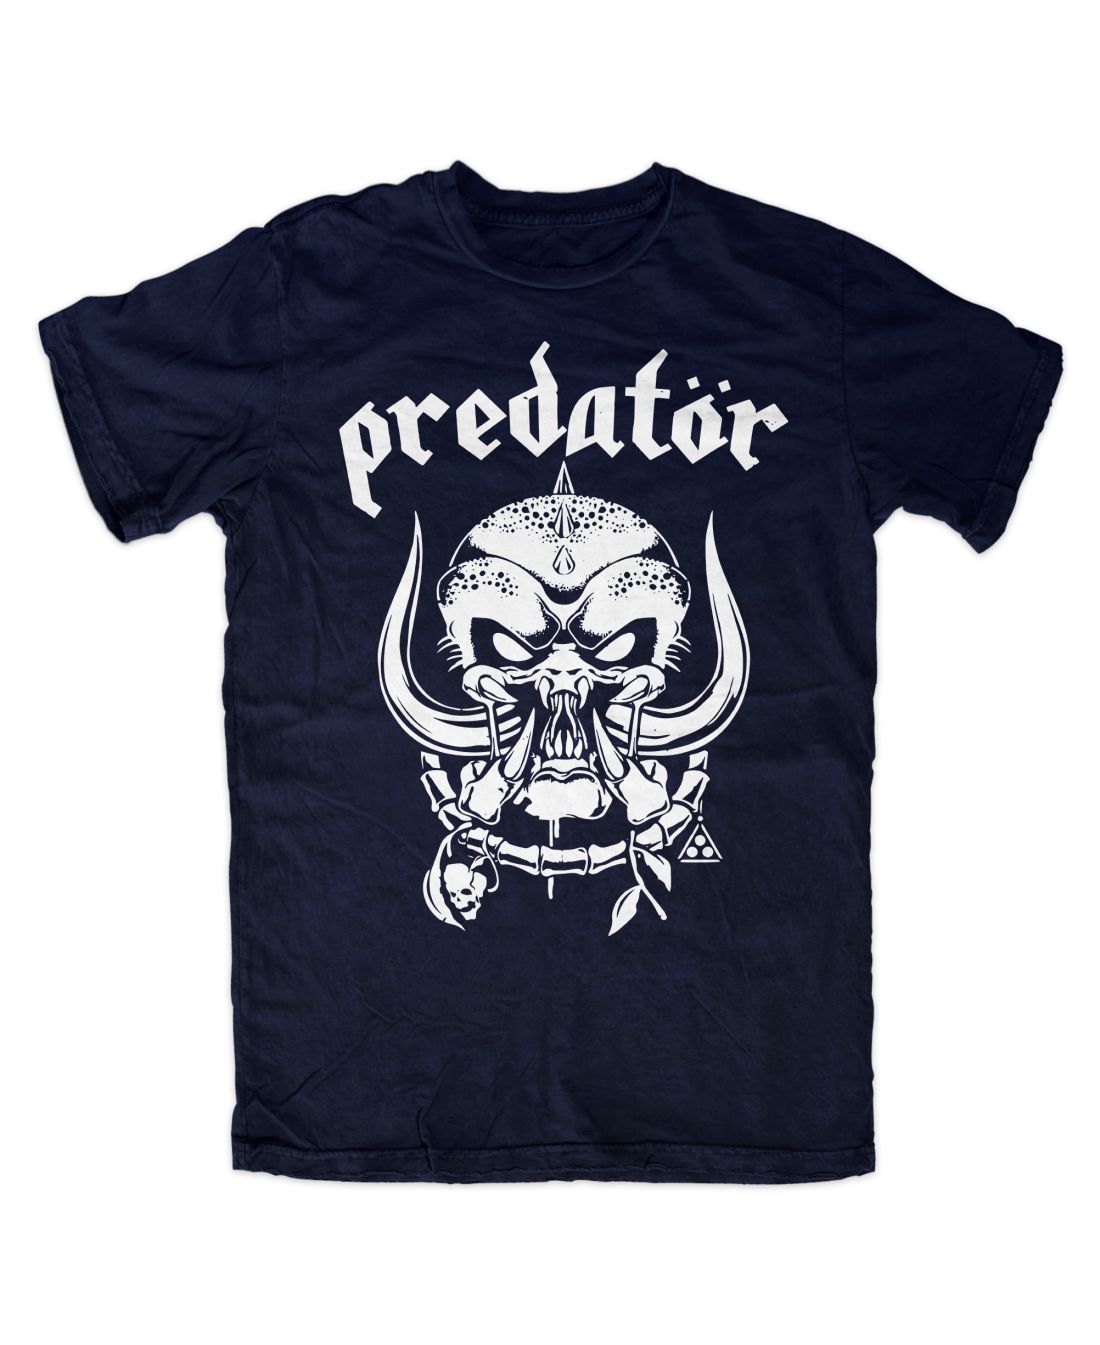 Predator 001 metal series (navy blue póló)